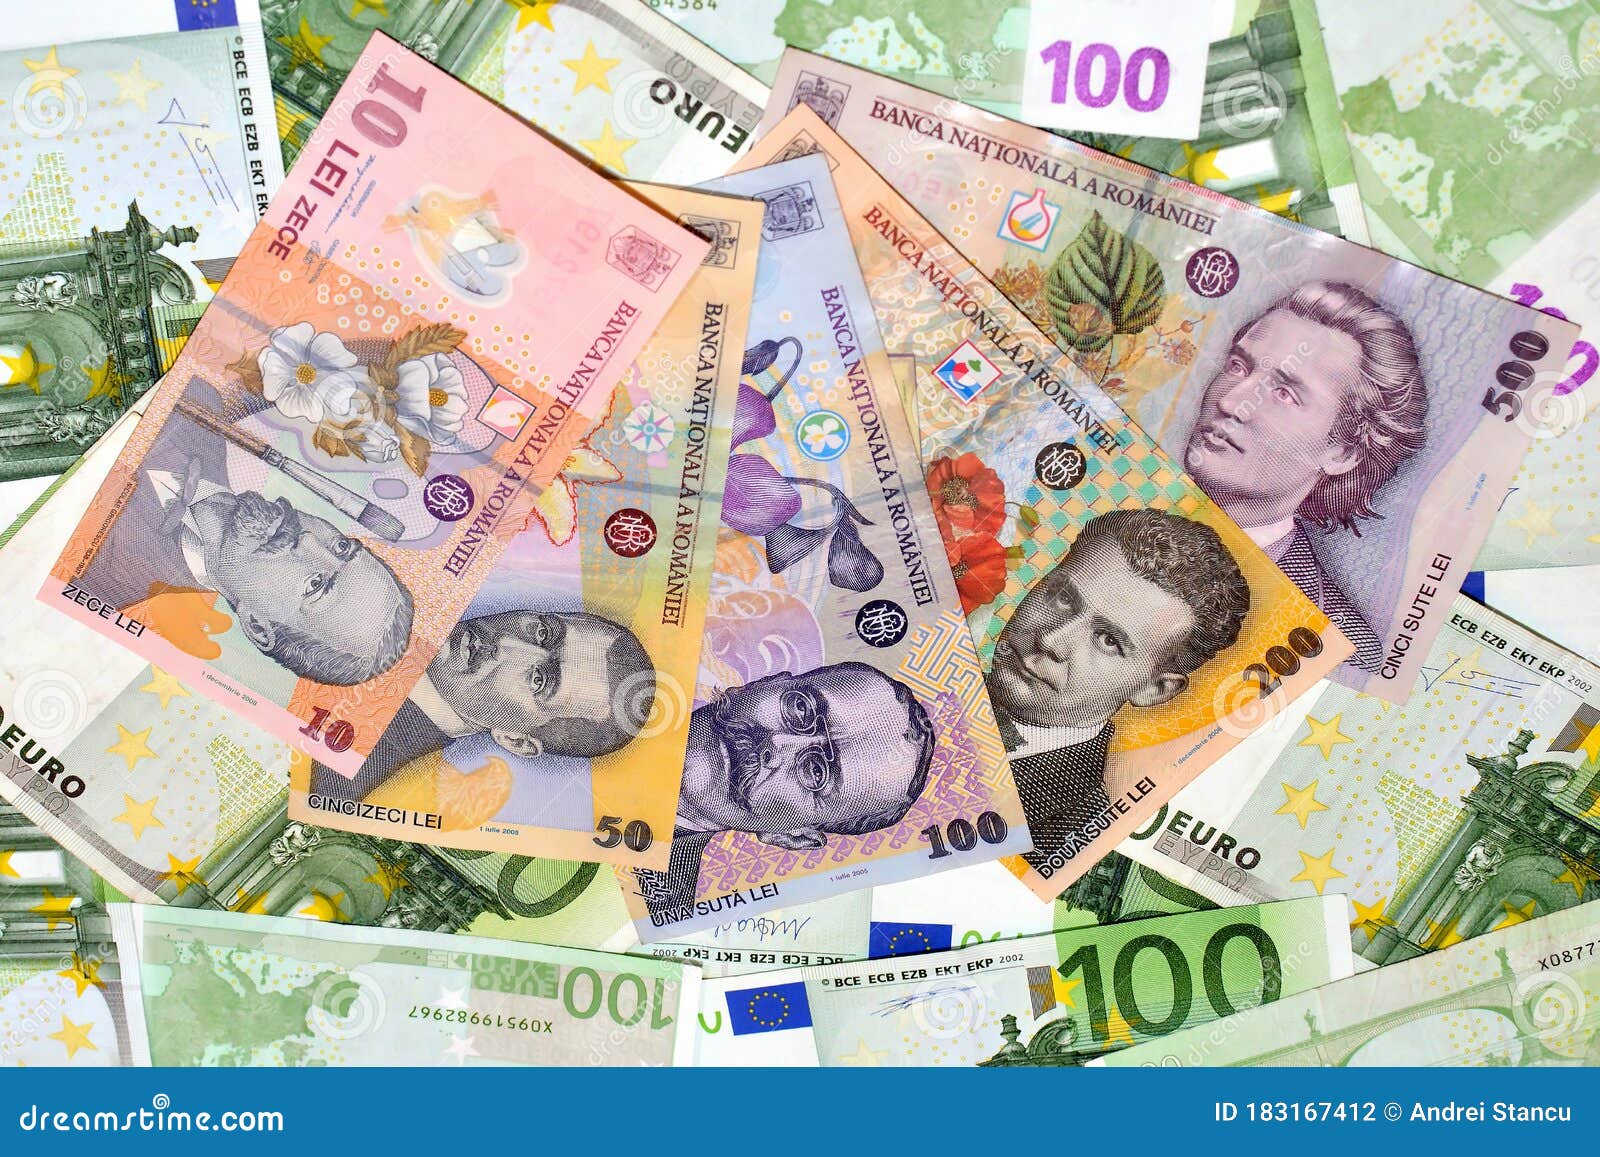 Romanian Leu (RON) to Euro (EUR)-Panda Remit